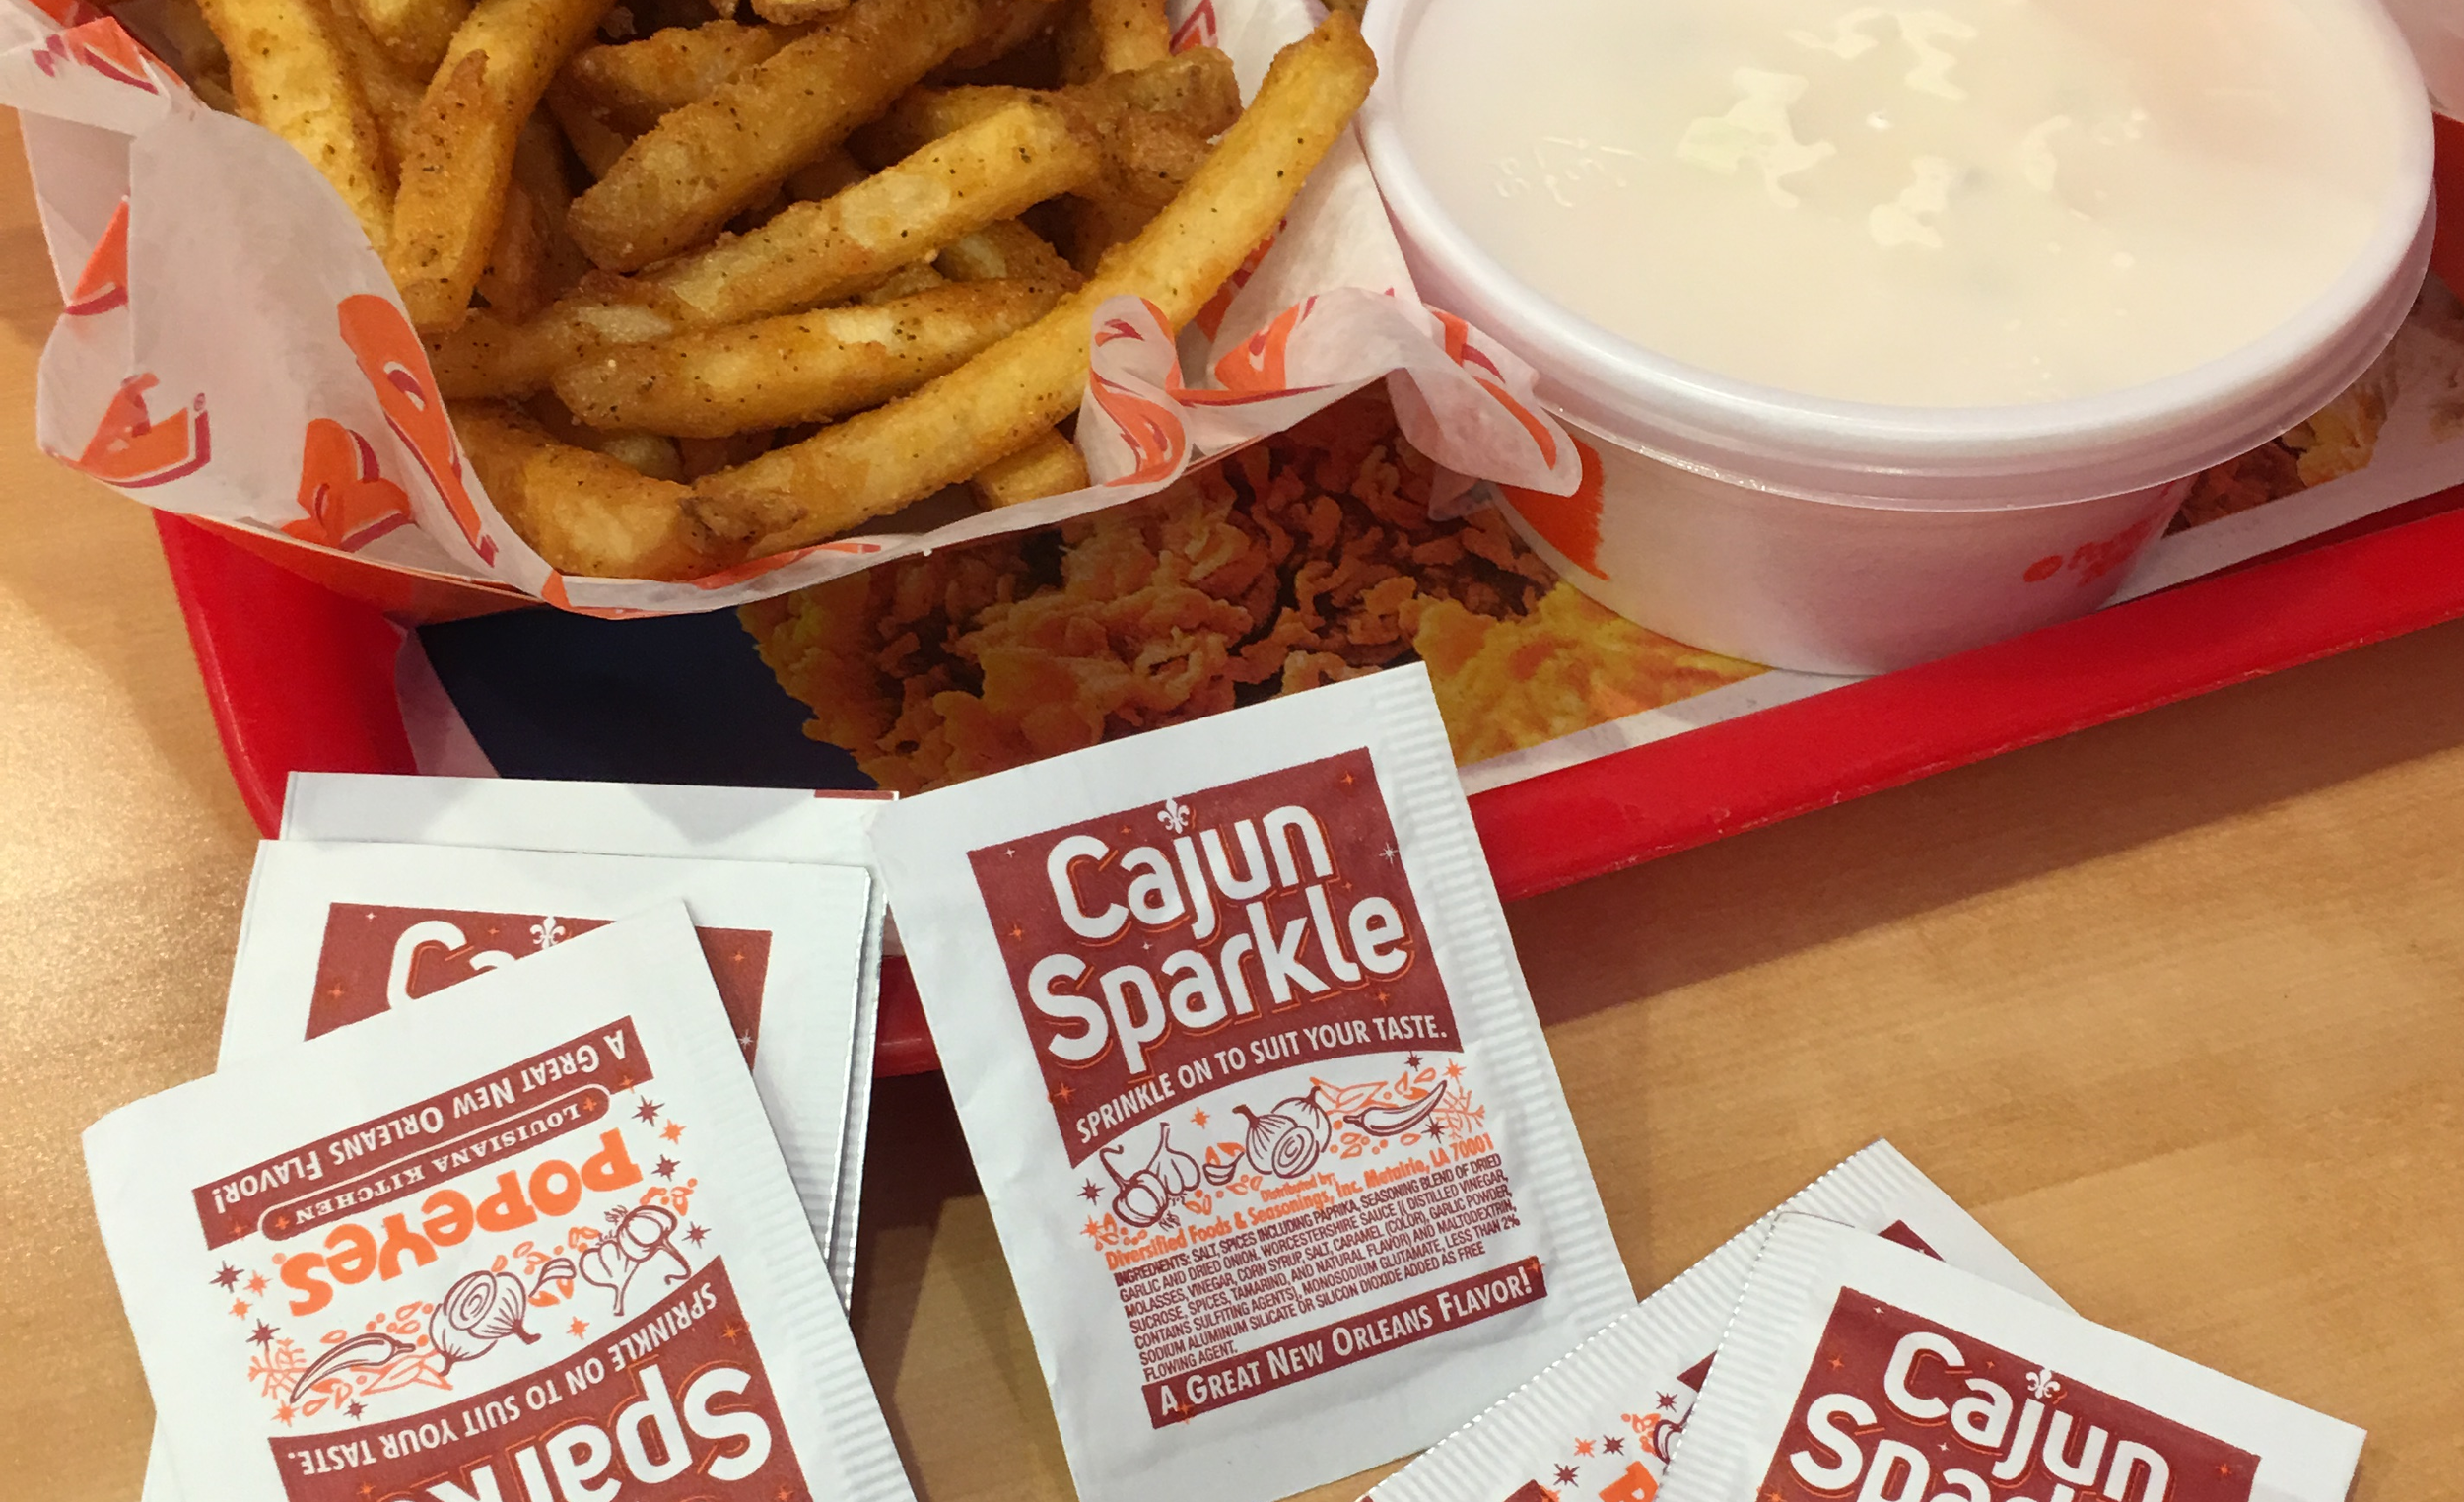 What is cajun sparkle